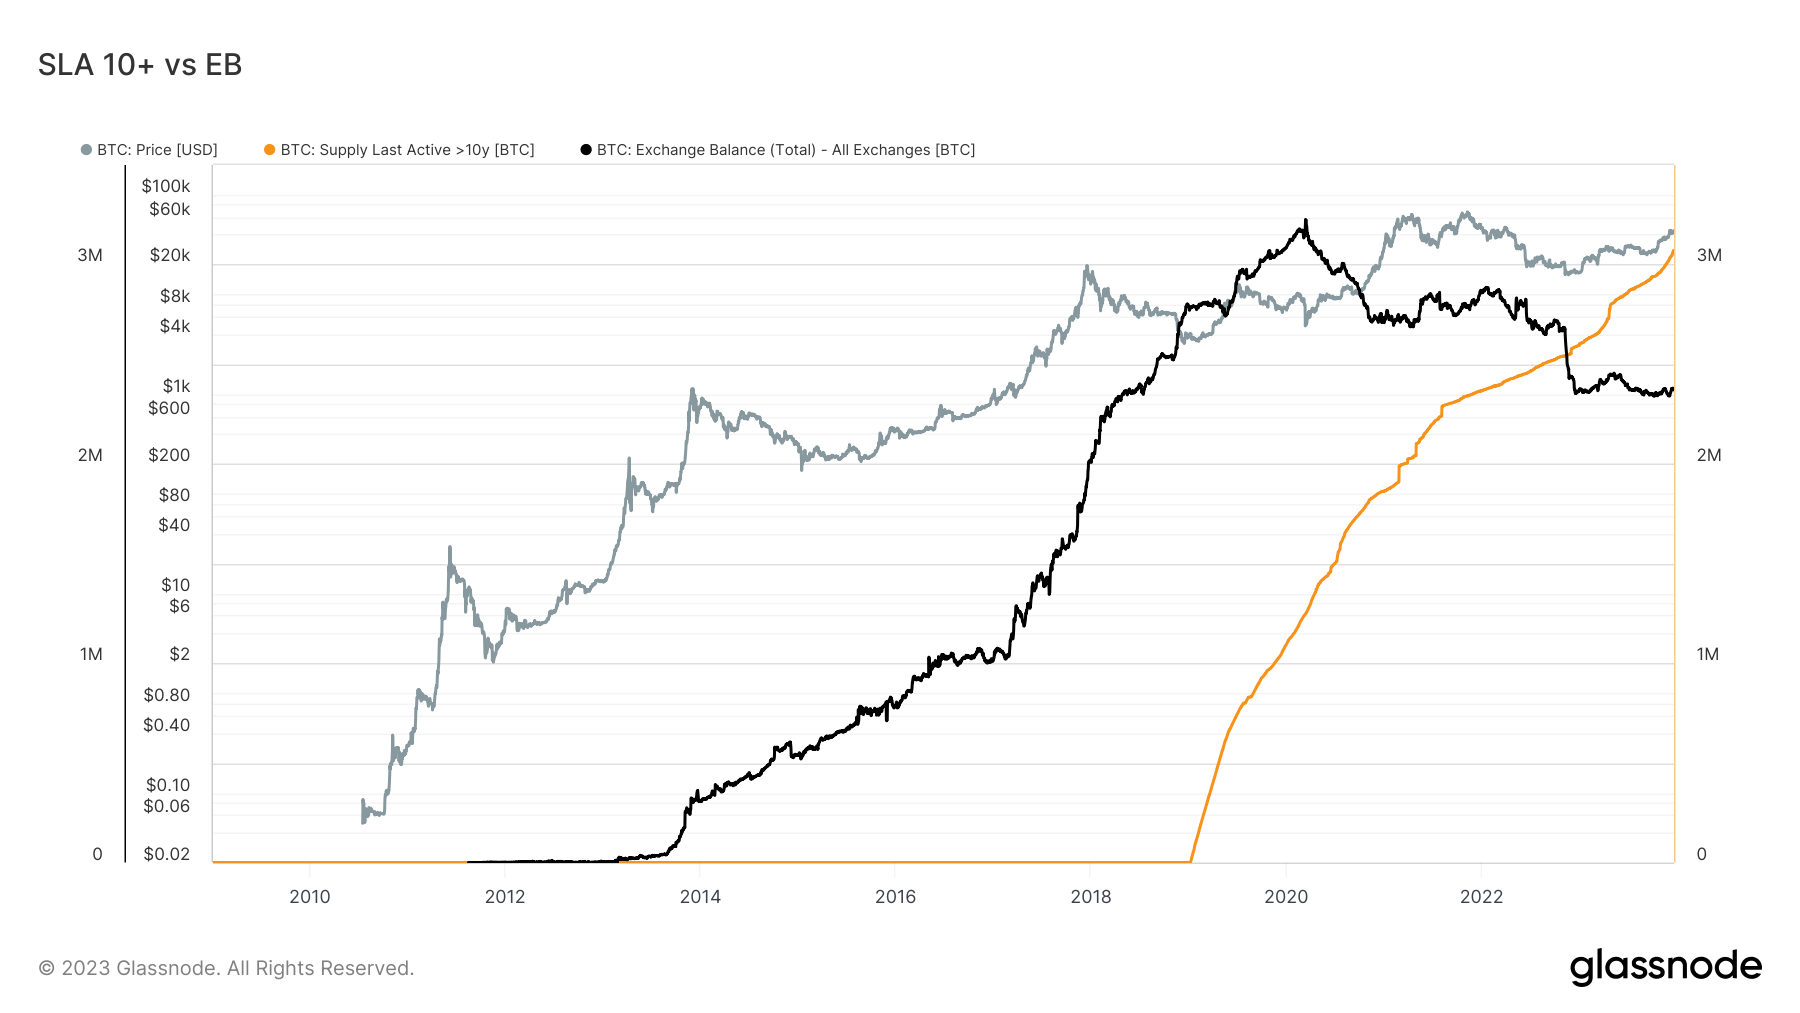 Supply Last Active 10+ years ago vs Exchange Balance: (Source: Glassnode)